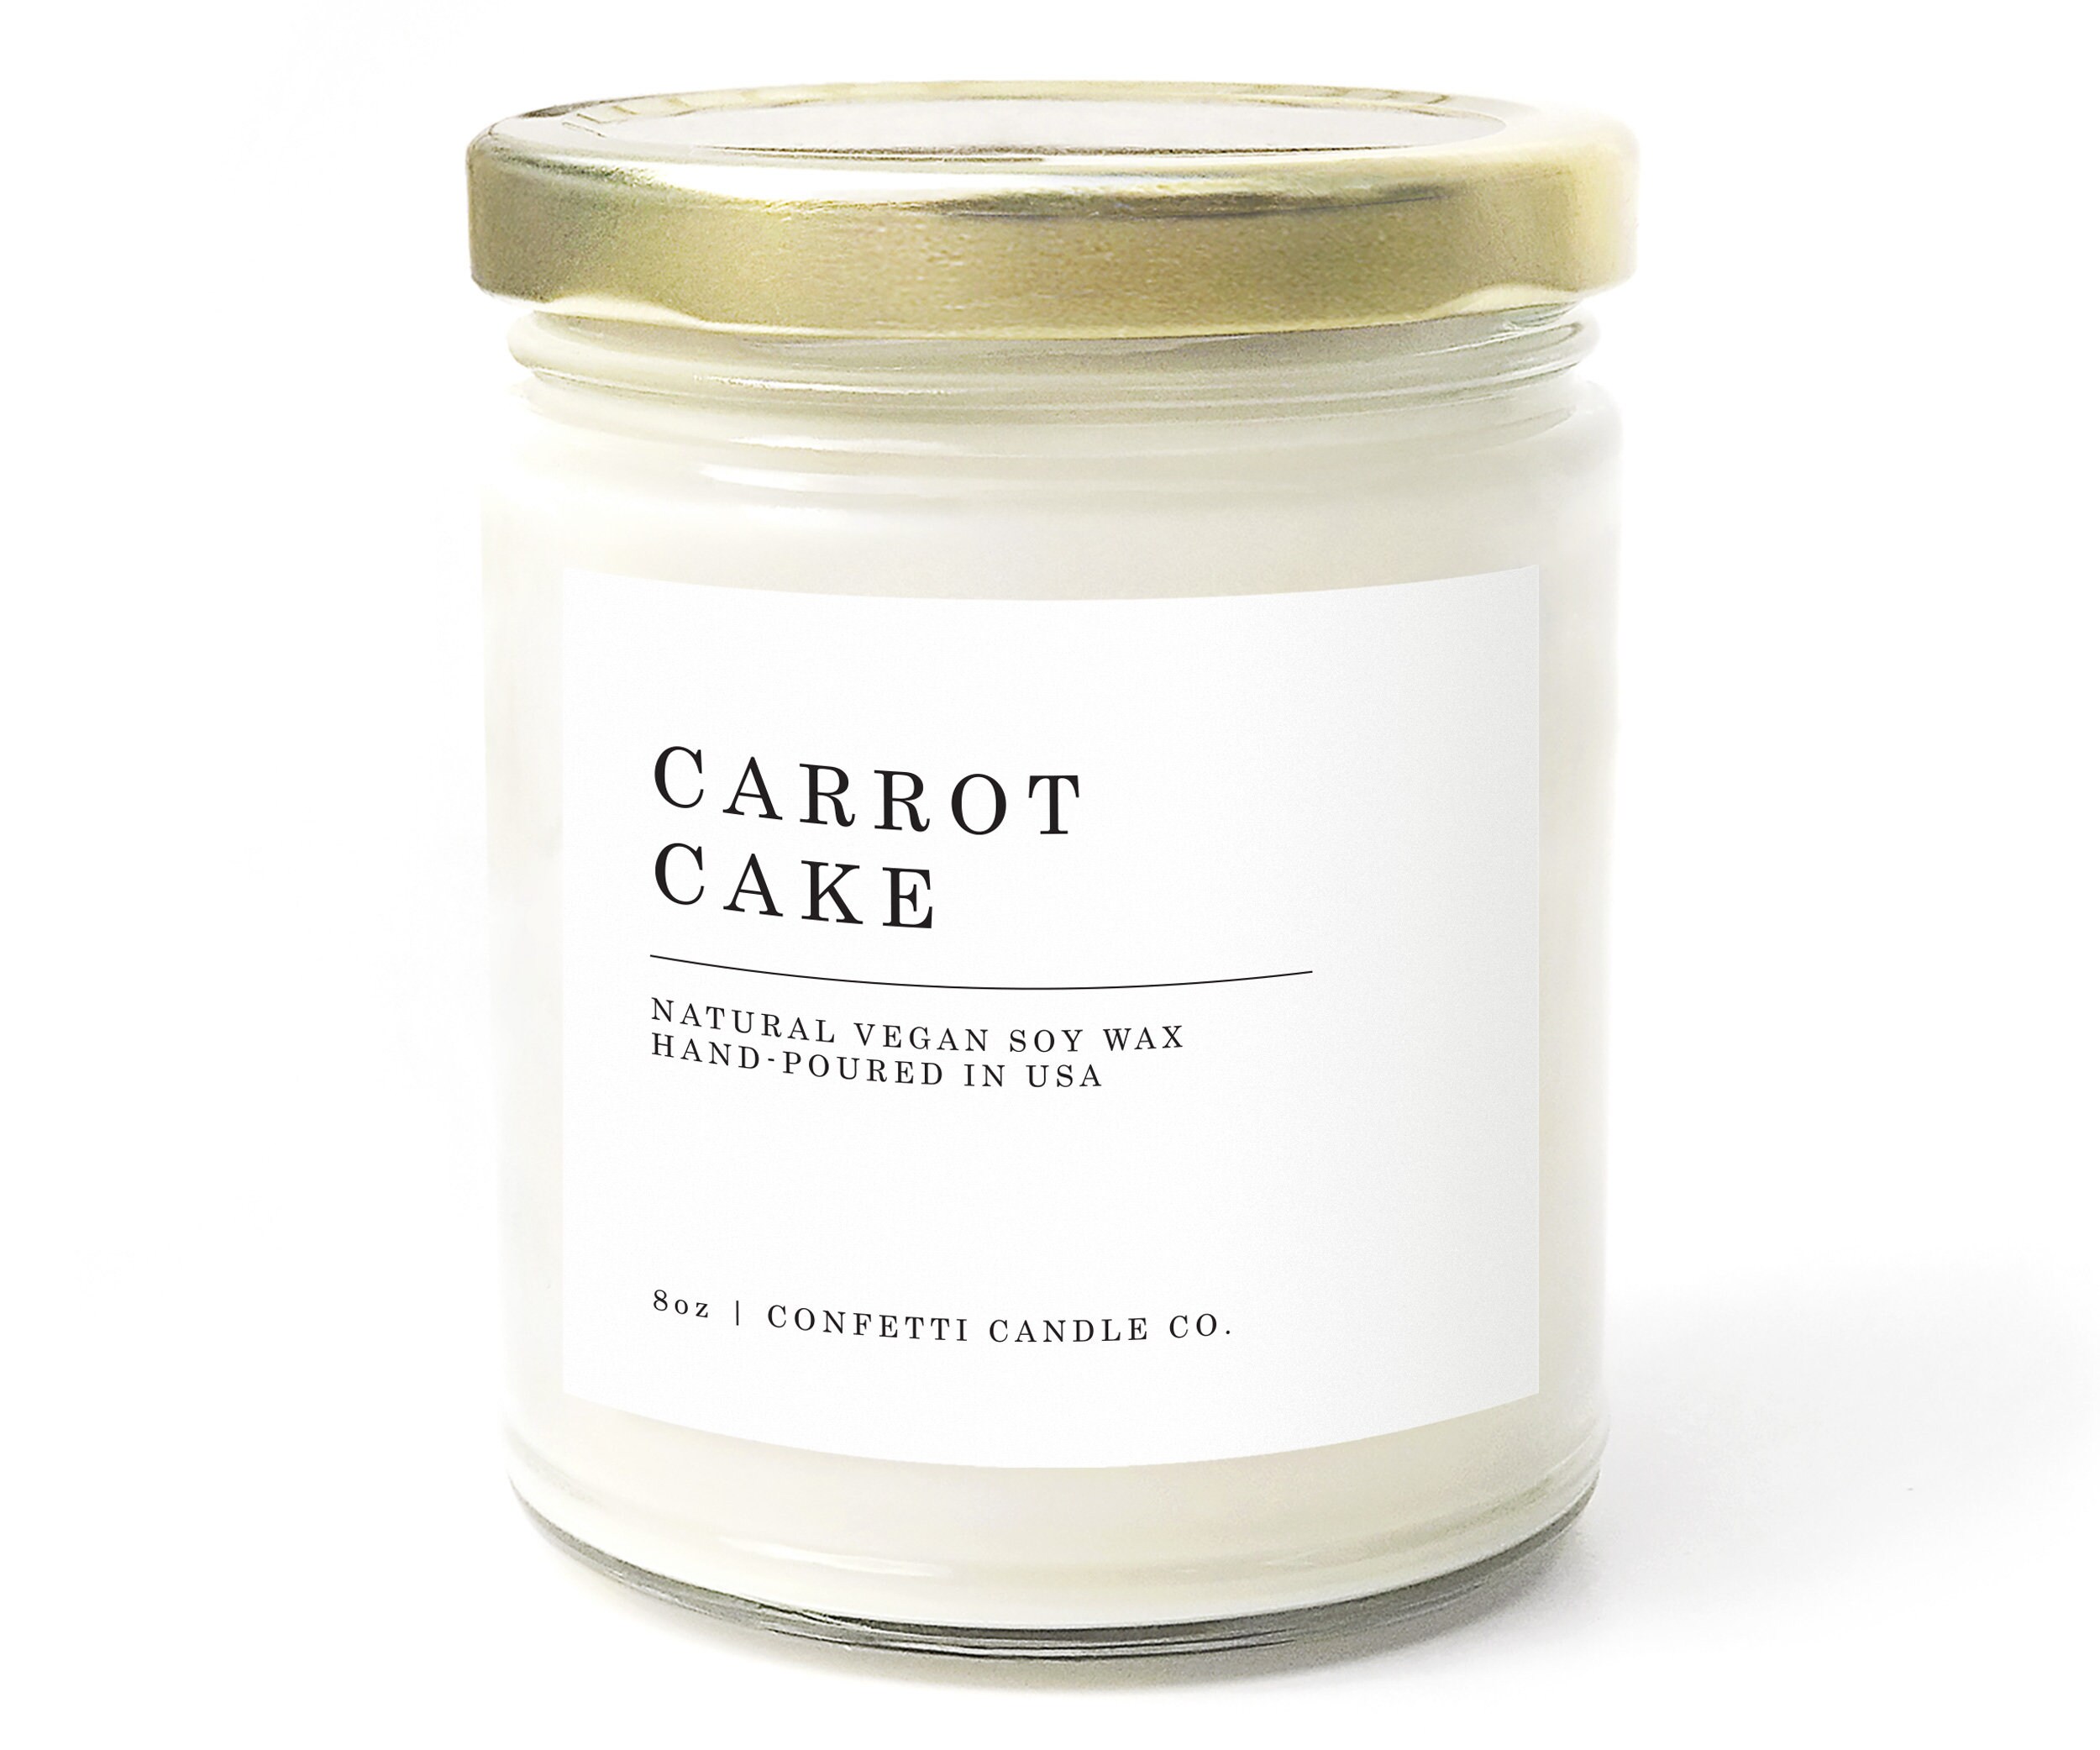 Carrot cake - Bougie artisanale parfumée à la cire de soja naturelle